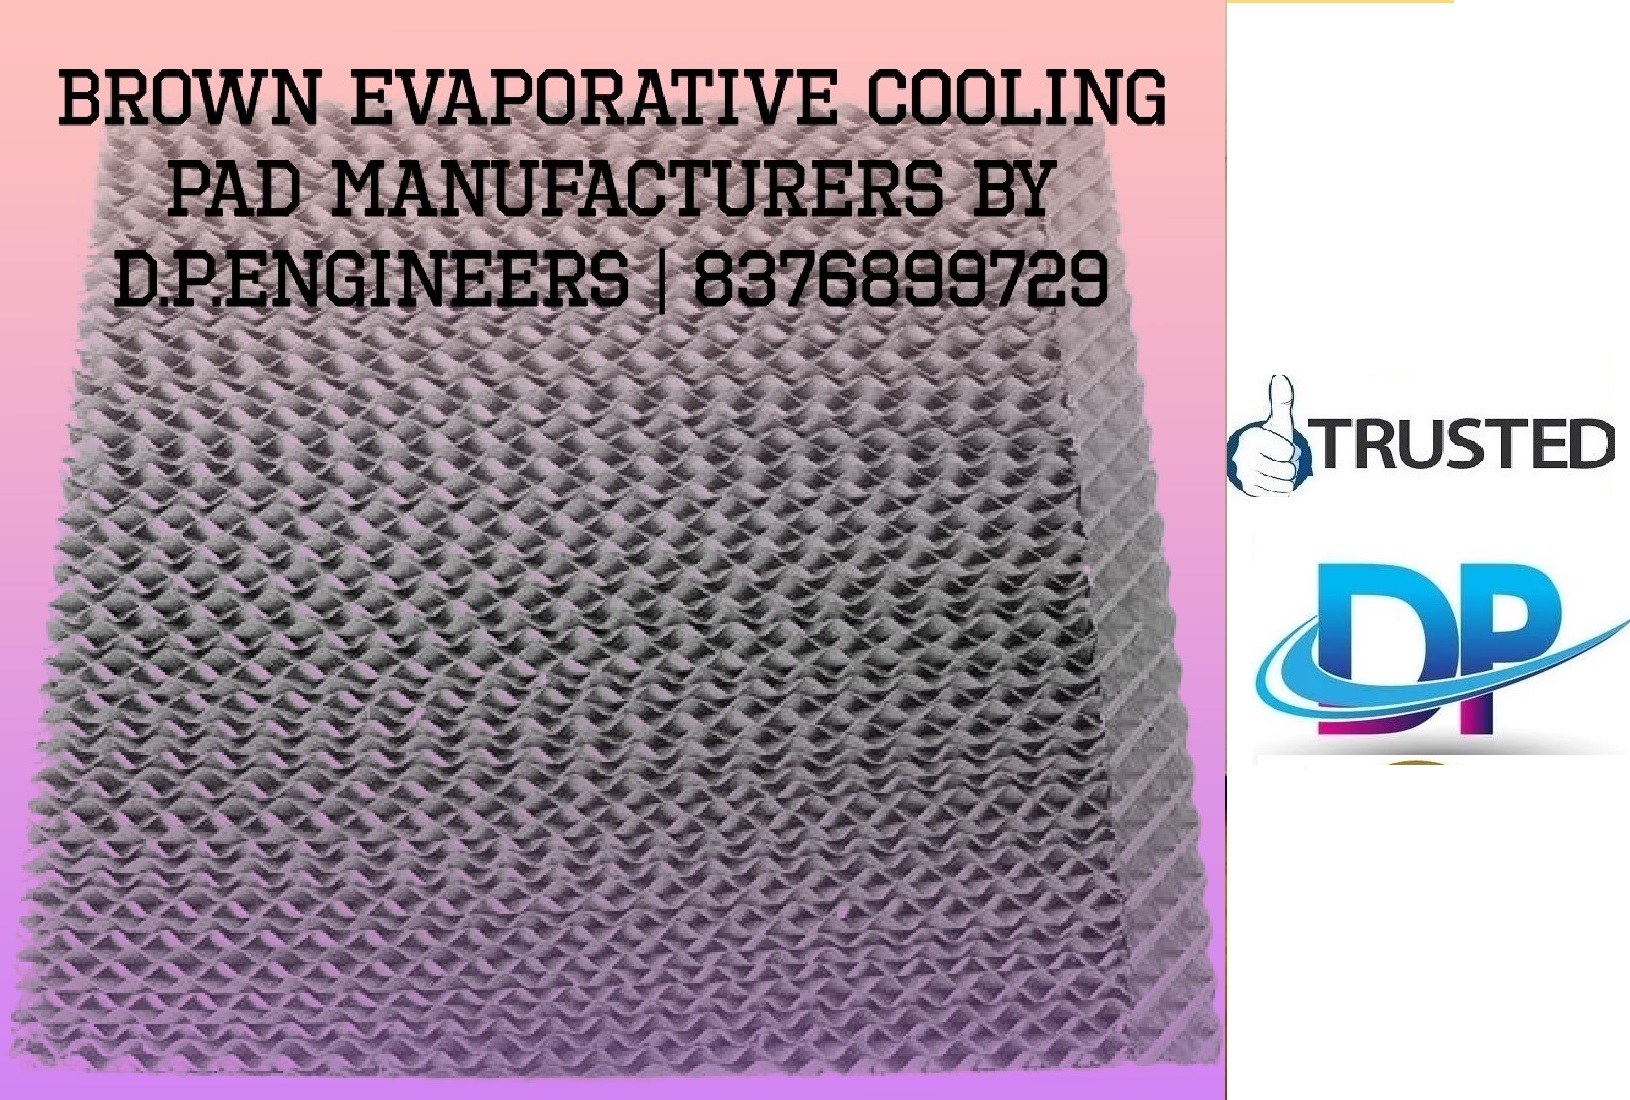 Air Washer Evaporative Cooling Pad by Sector 20 Noida Uttar Pradesh